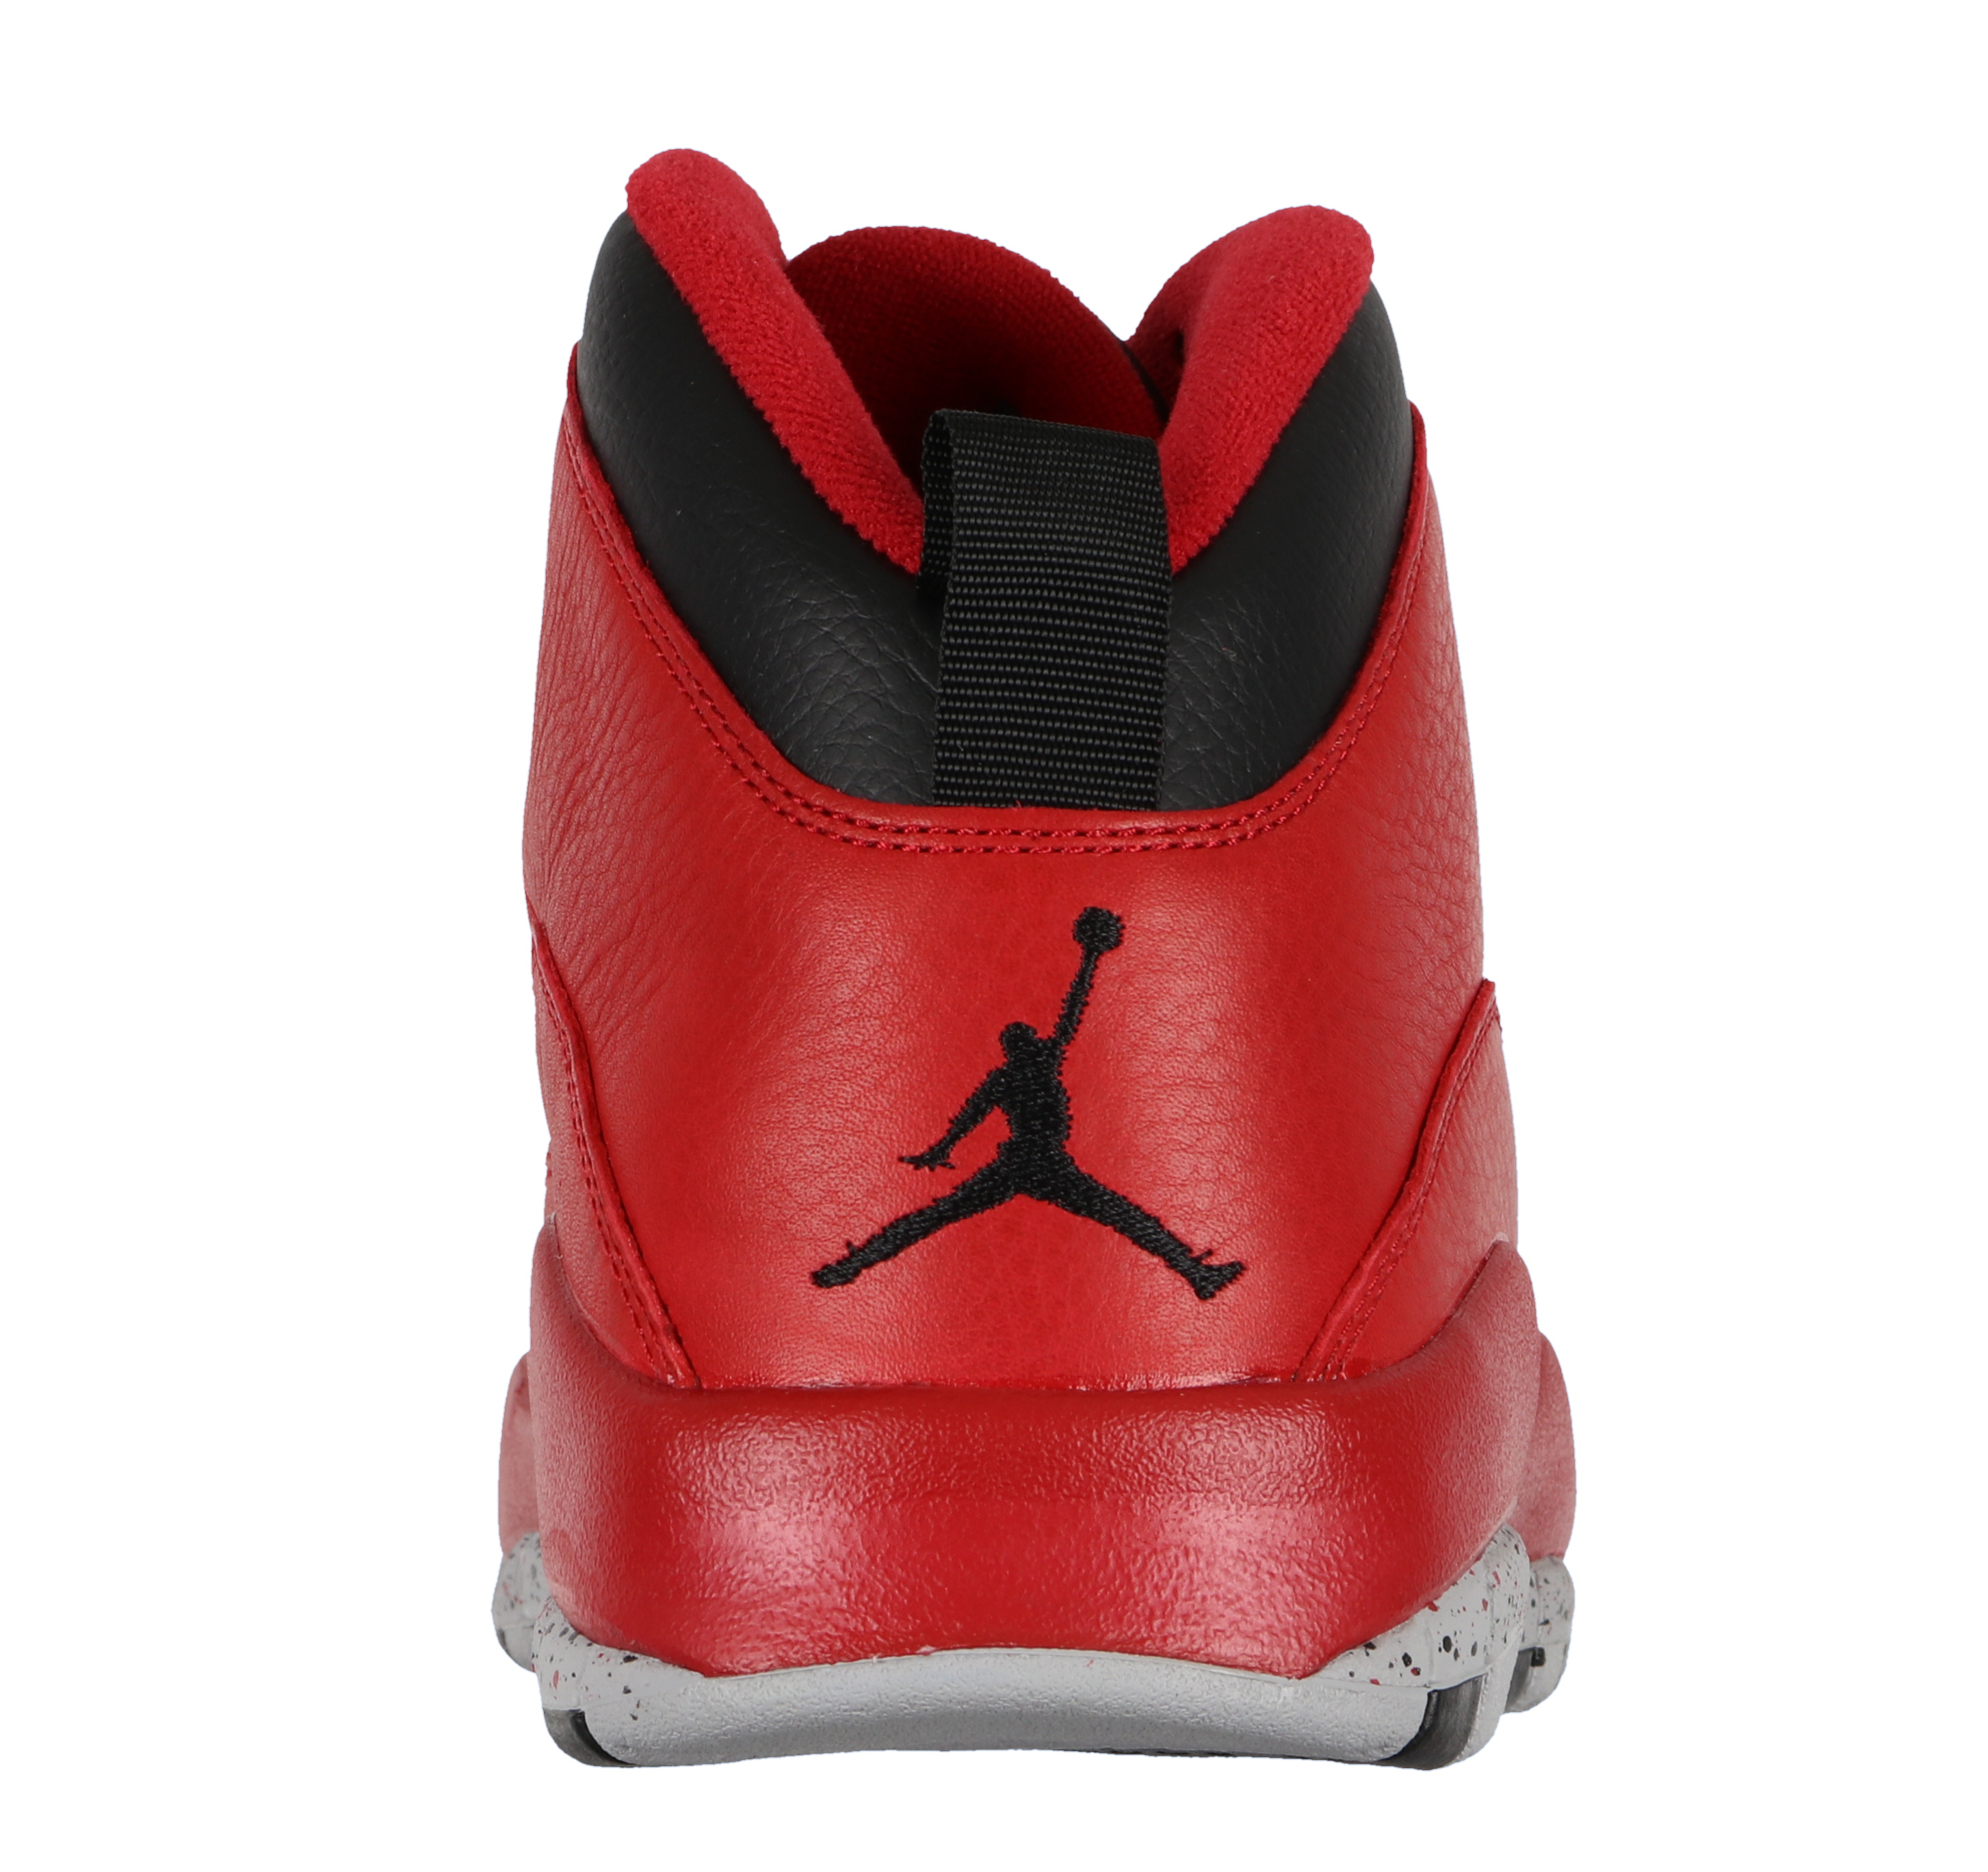 Jordan Men's Retro 10 30th Basketball Shoes sz 9.5 Red Black Bulls Over Broadway Edition - image 5 of 7